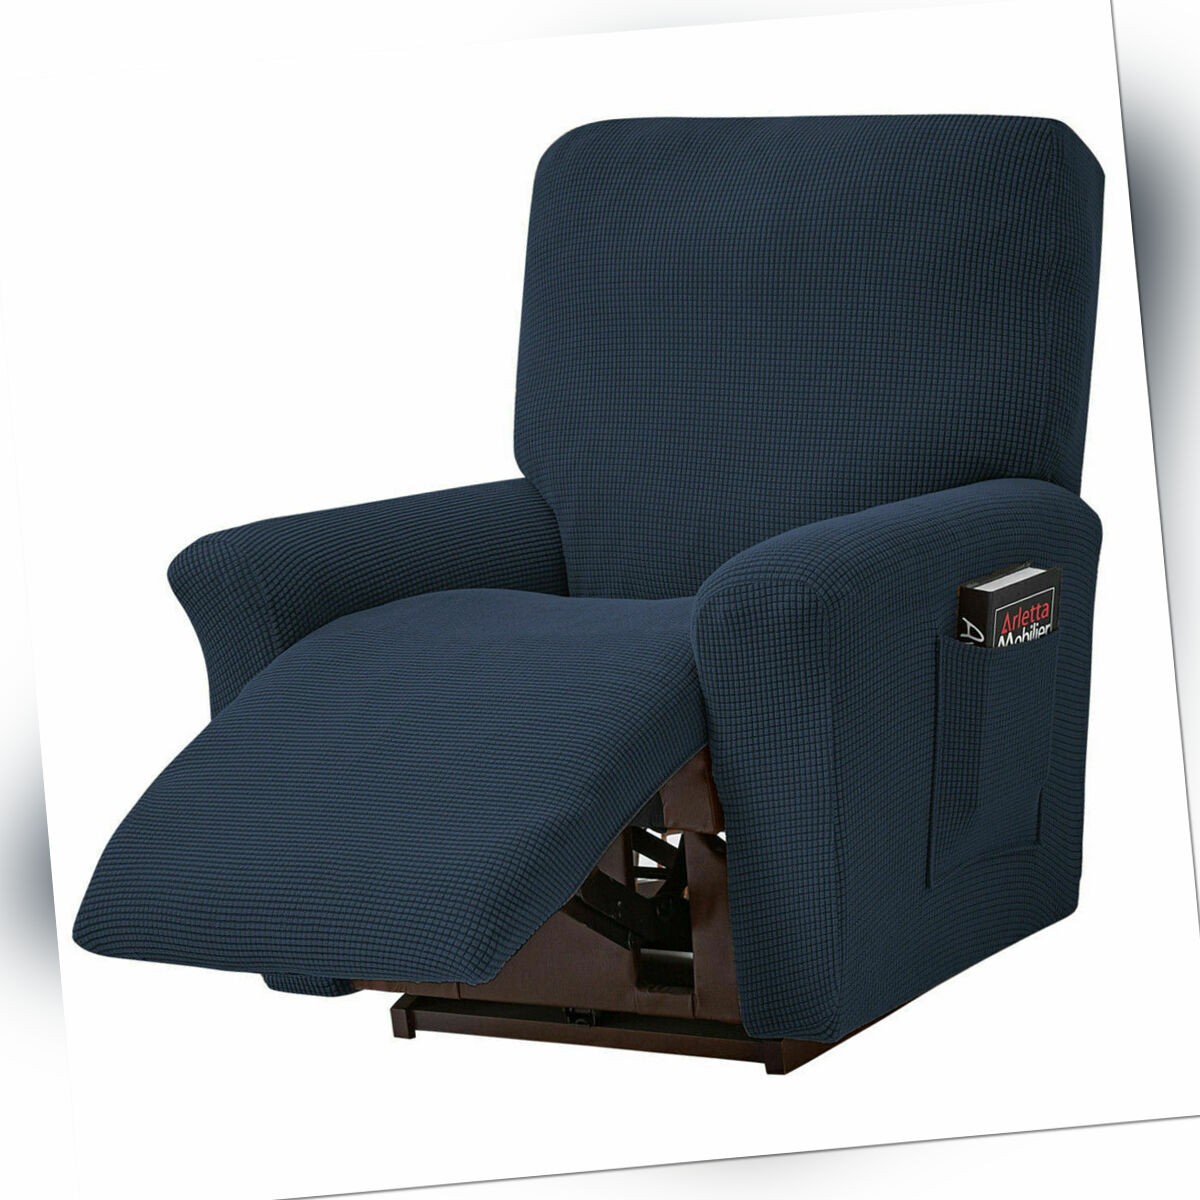 Sesselbezug Stretchhusse Relaxsessel Komplett für Fernsehsessel Liege Sessel Neu